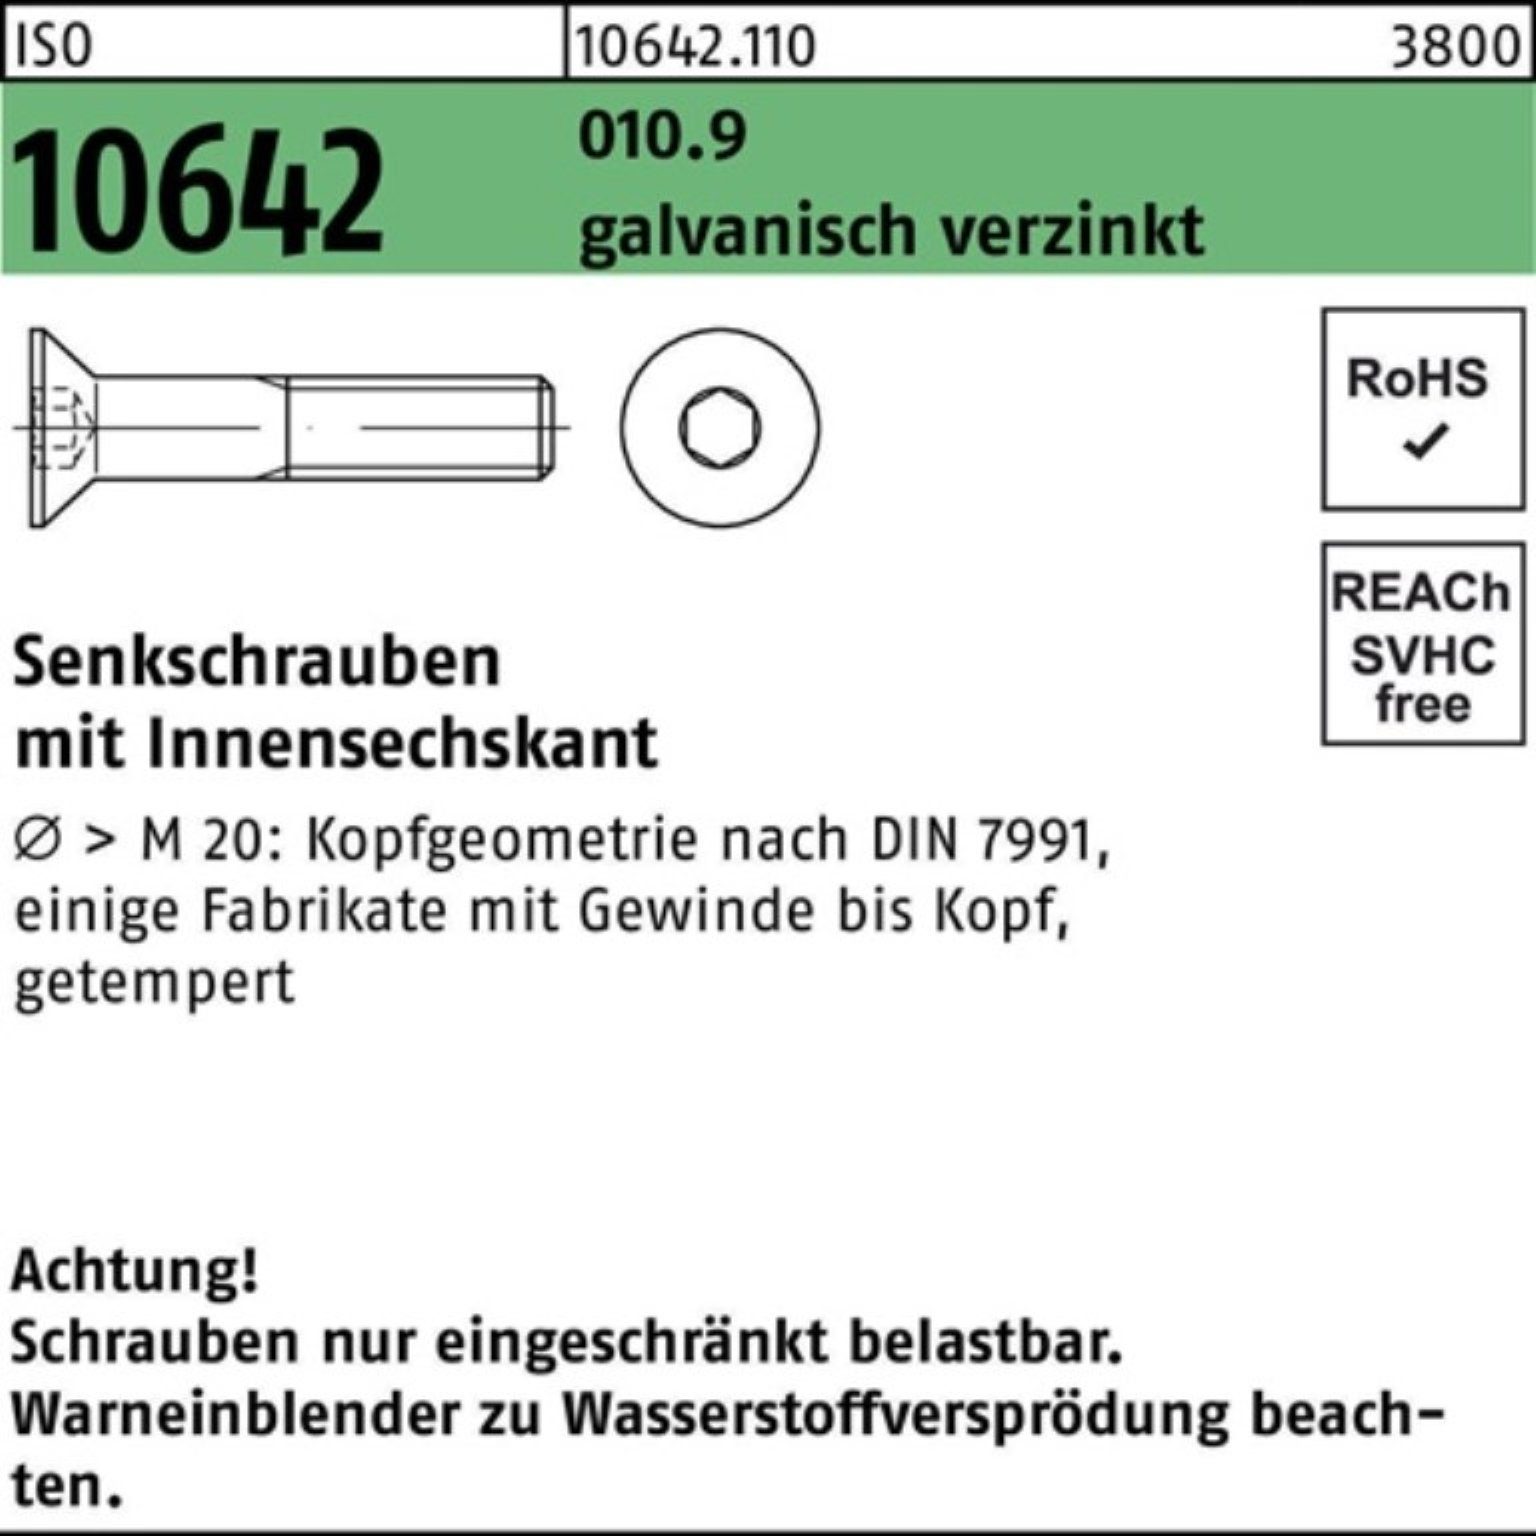 M5x ISO 30 Senkschraube Reyher Senkschraube Pack 10642 galv.verz. 010.9 Innen-6kt 50 500er